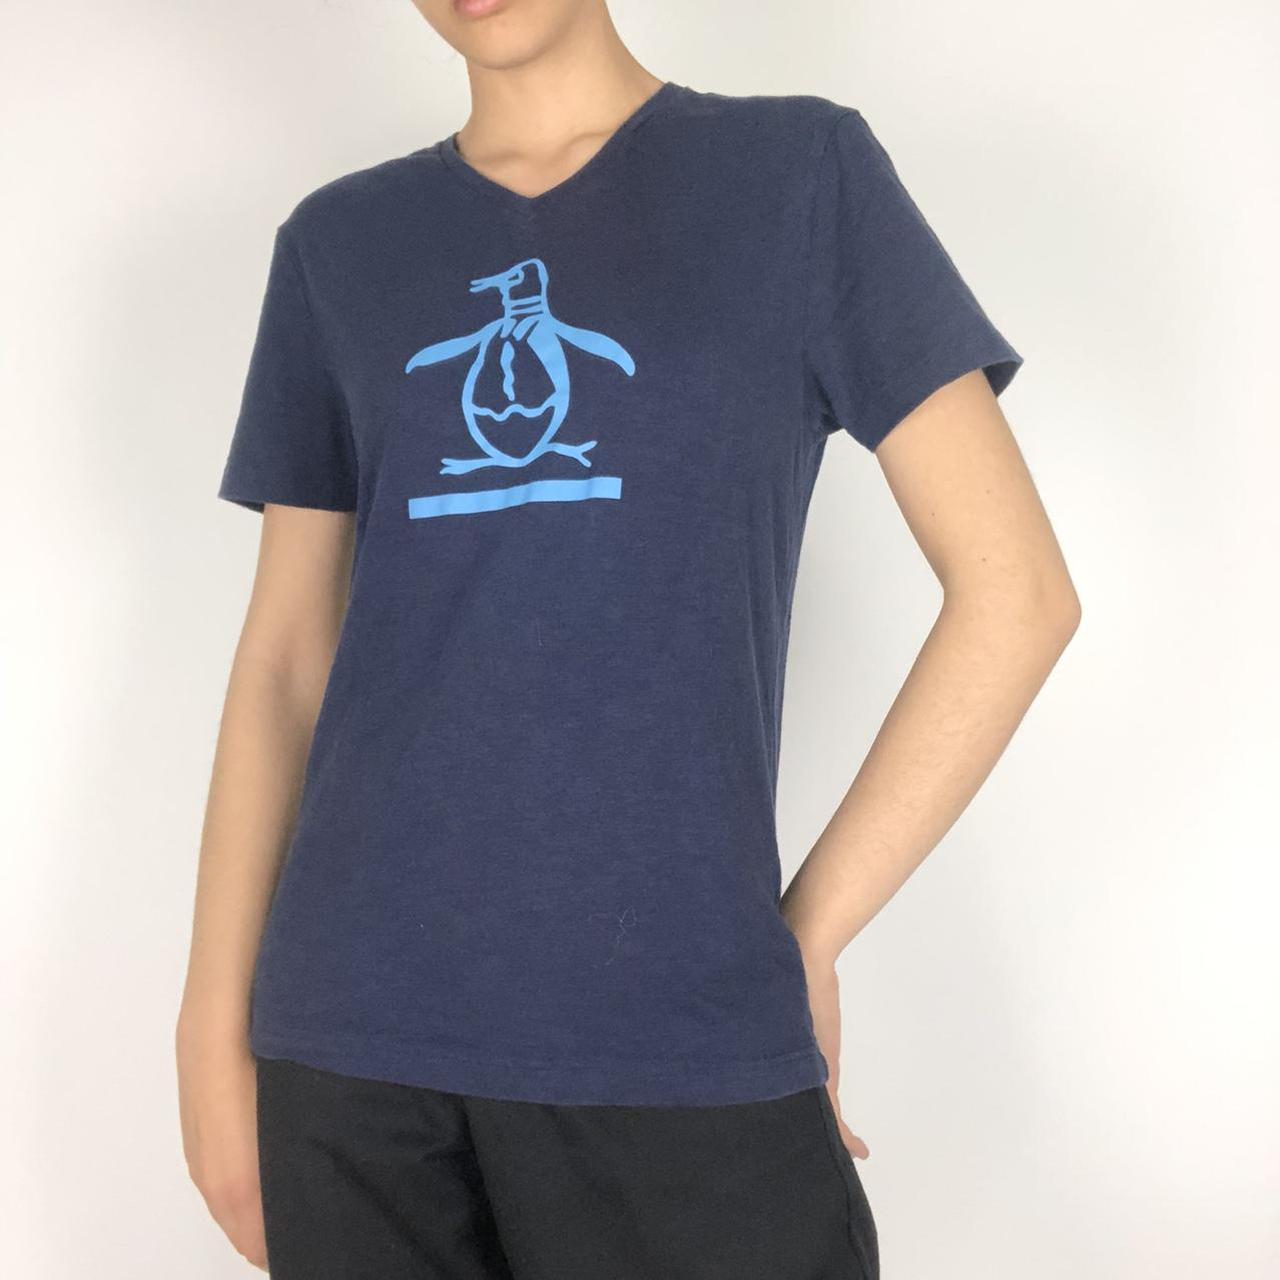 Product Image 3 - Navy blue original penguin shirt

Form